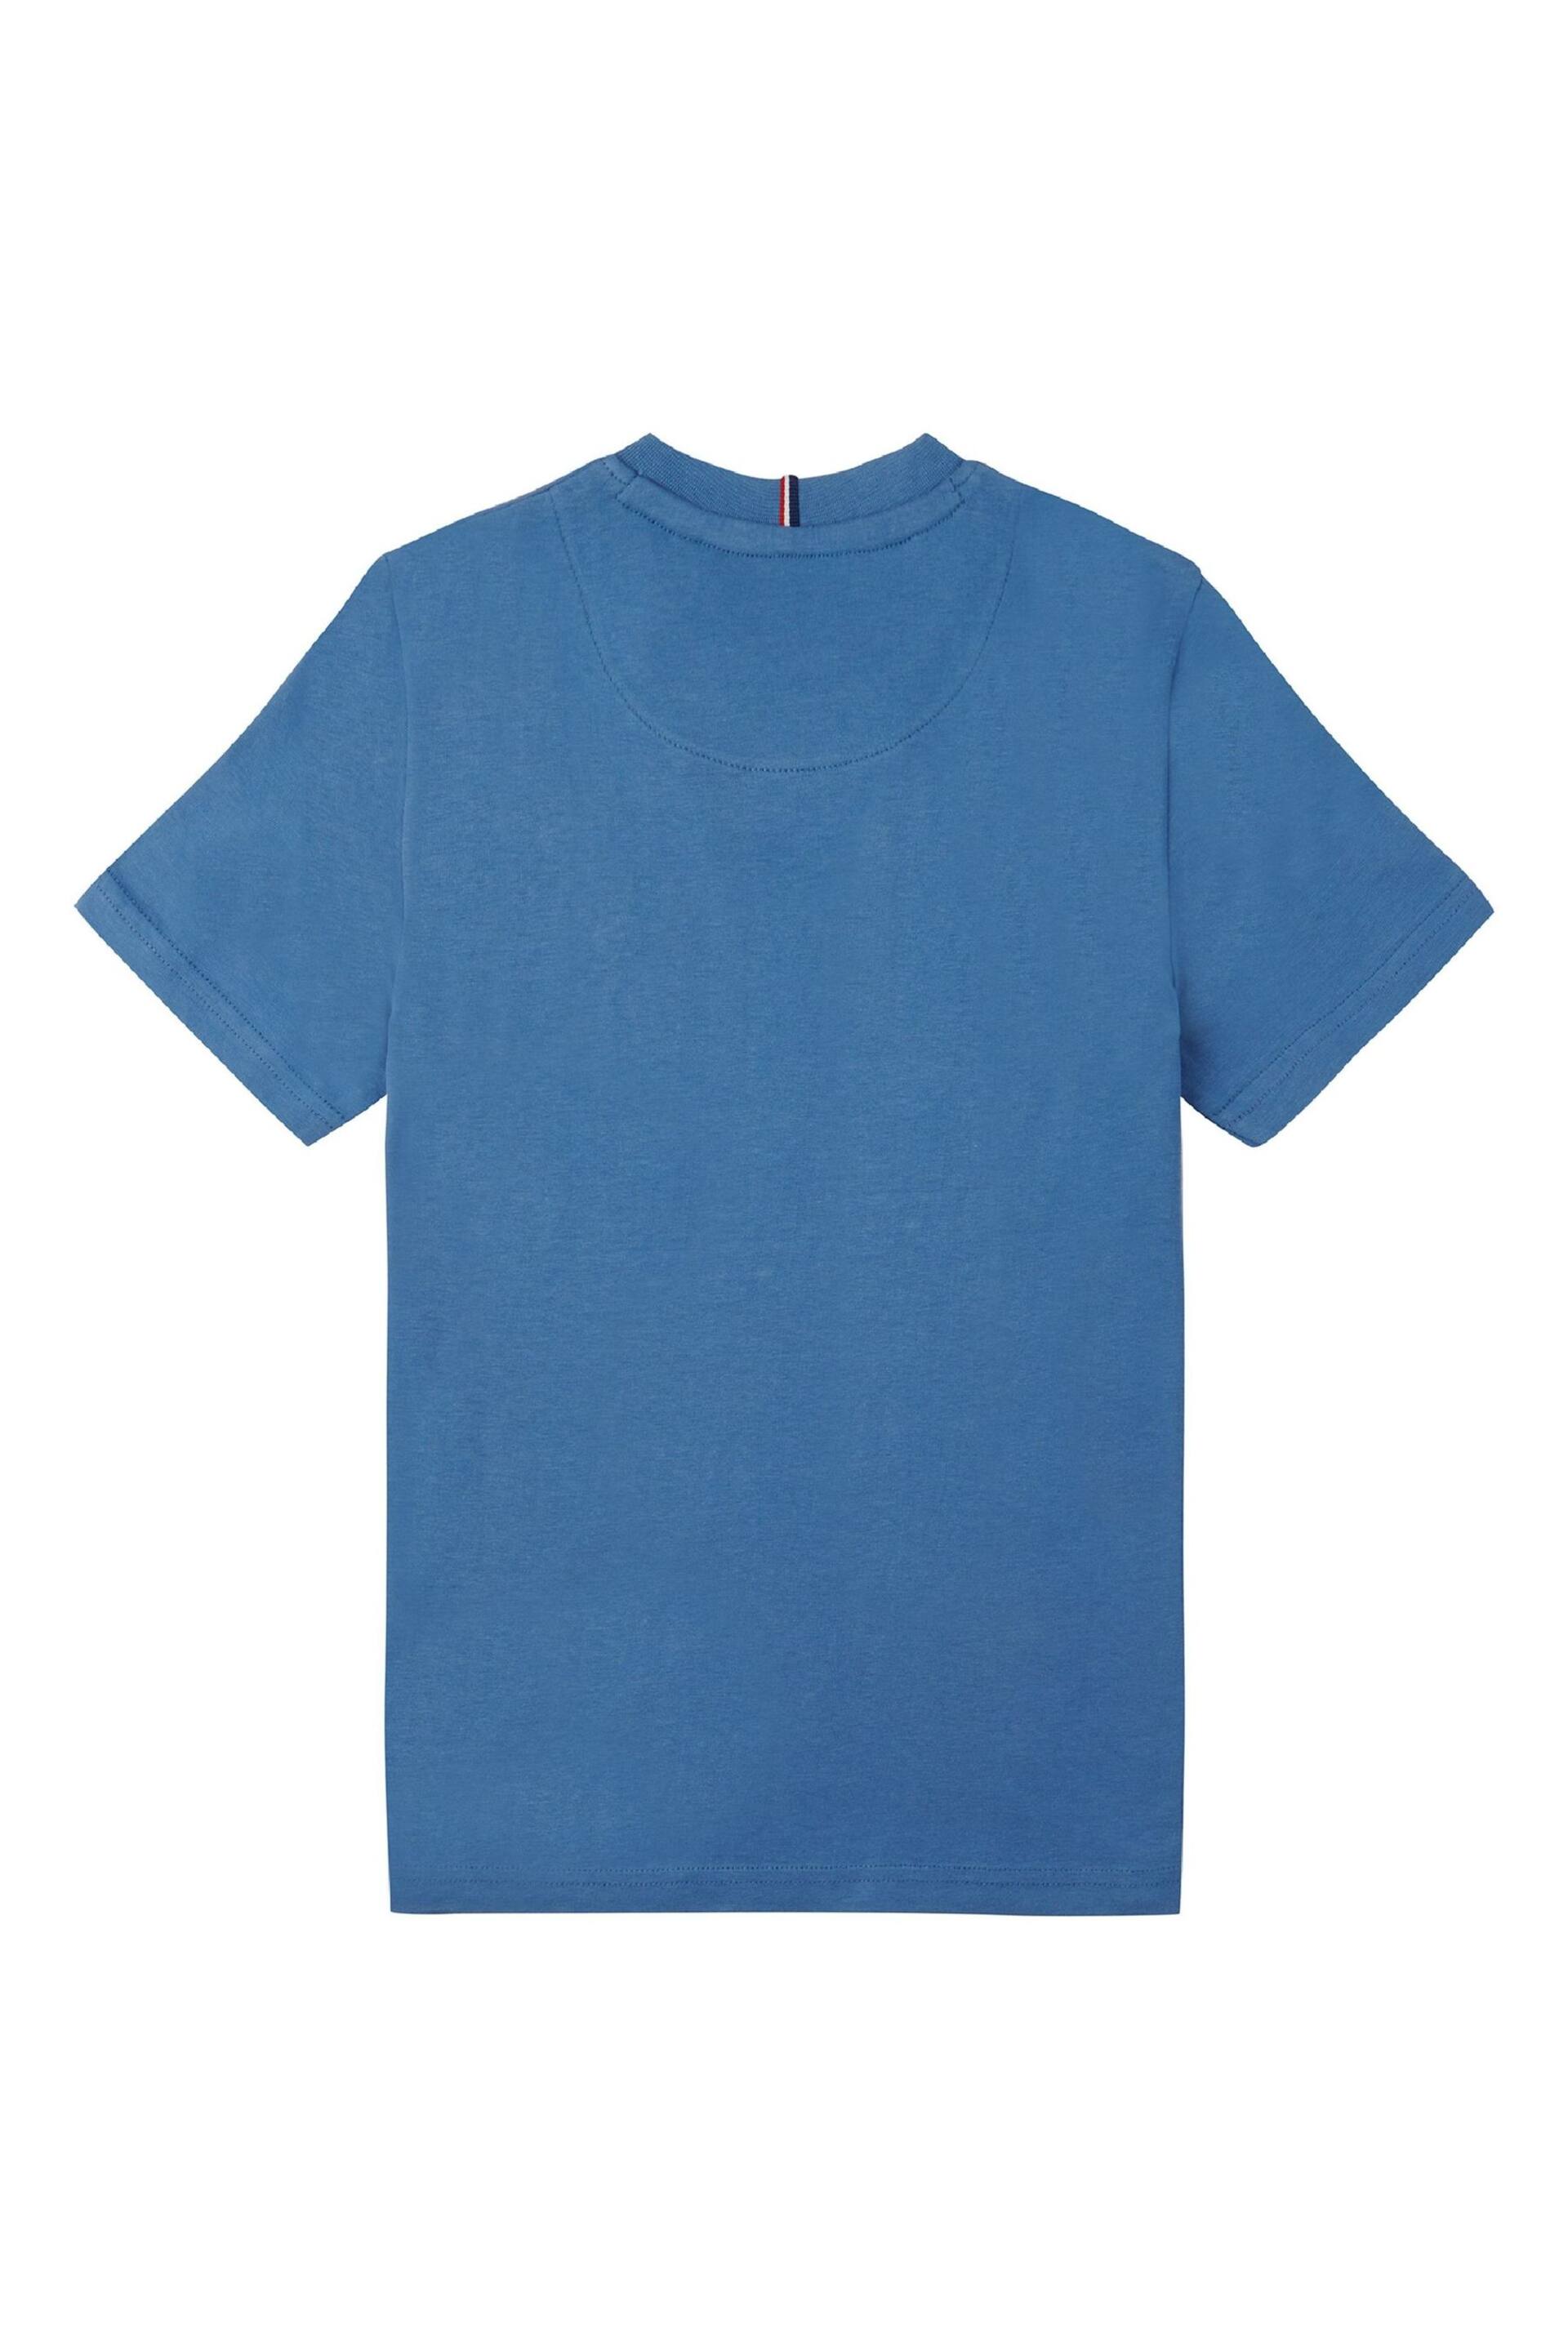 U.S. Polo Assn. Boys Blue Double Horsemen T-Shirt - Image 6 of 7